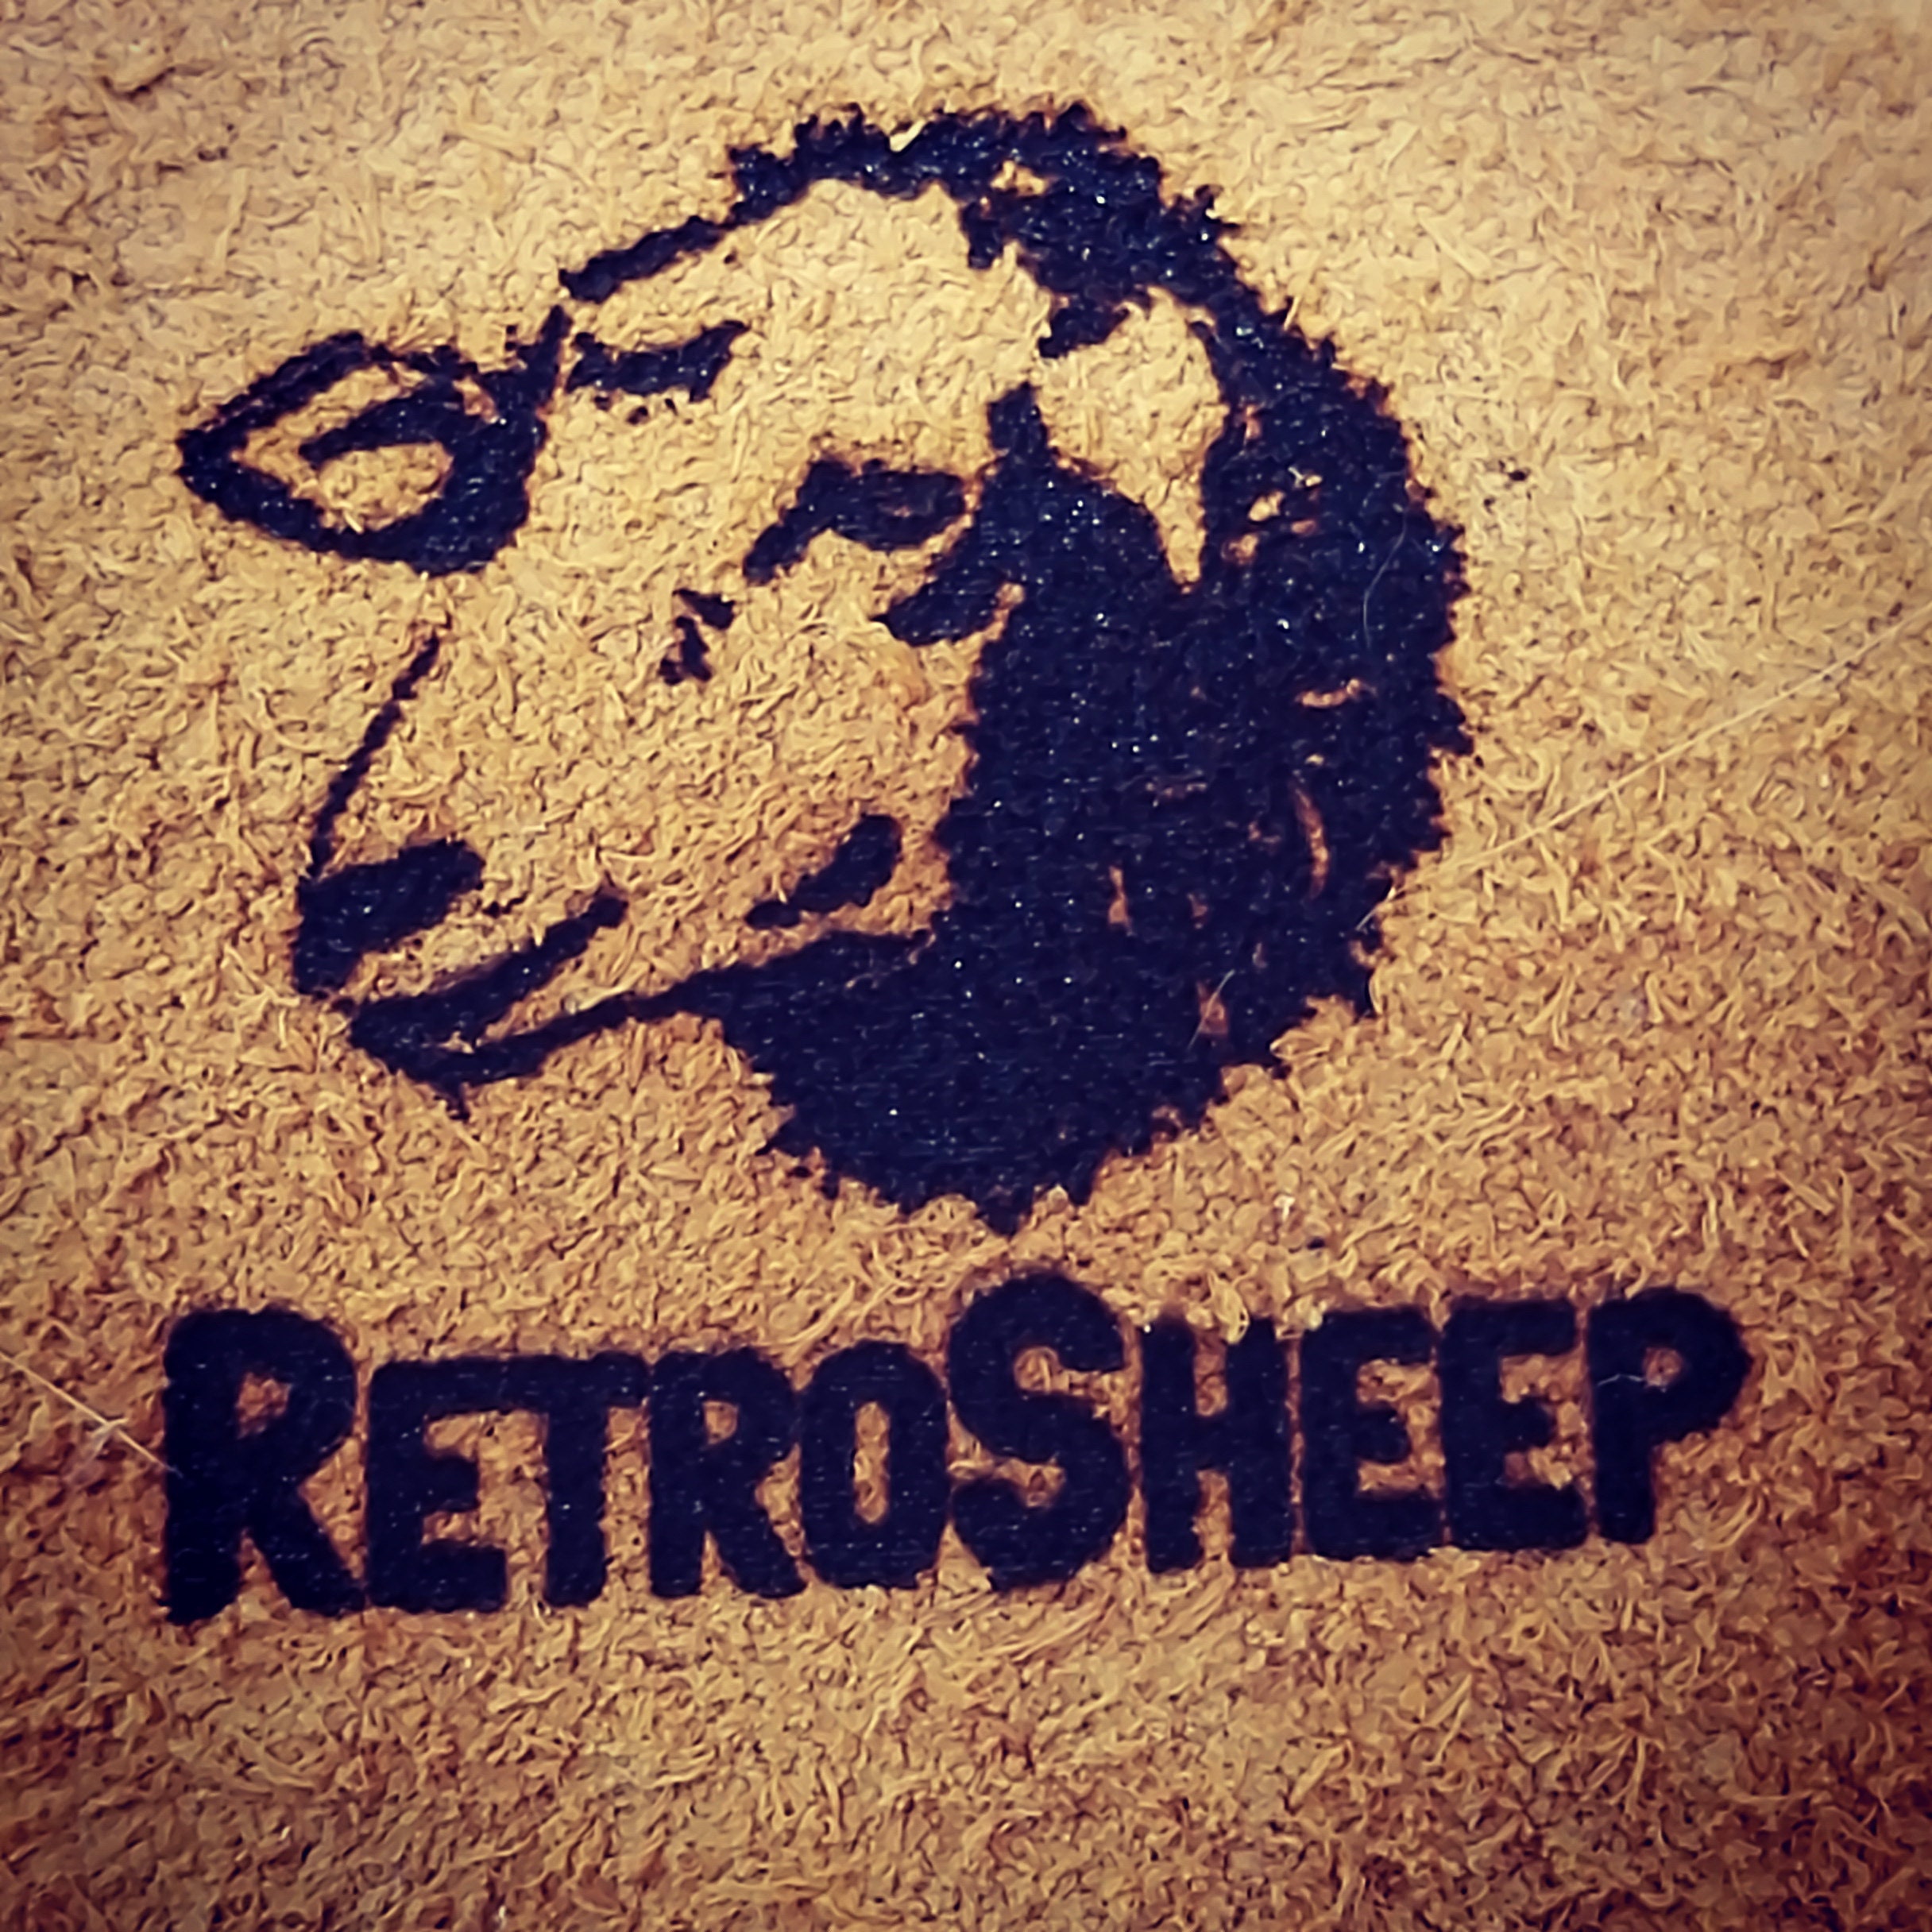 RetroSheepknits - Handmade Unique Personalized Gifts #Etsy